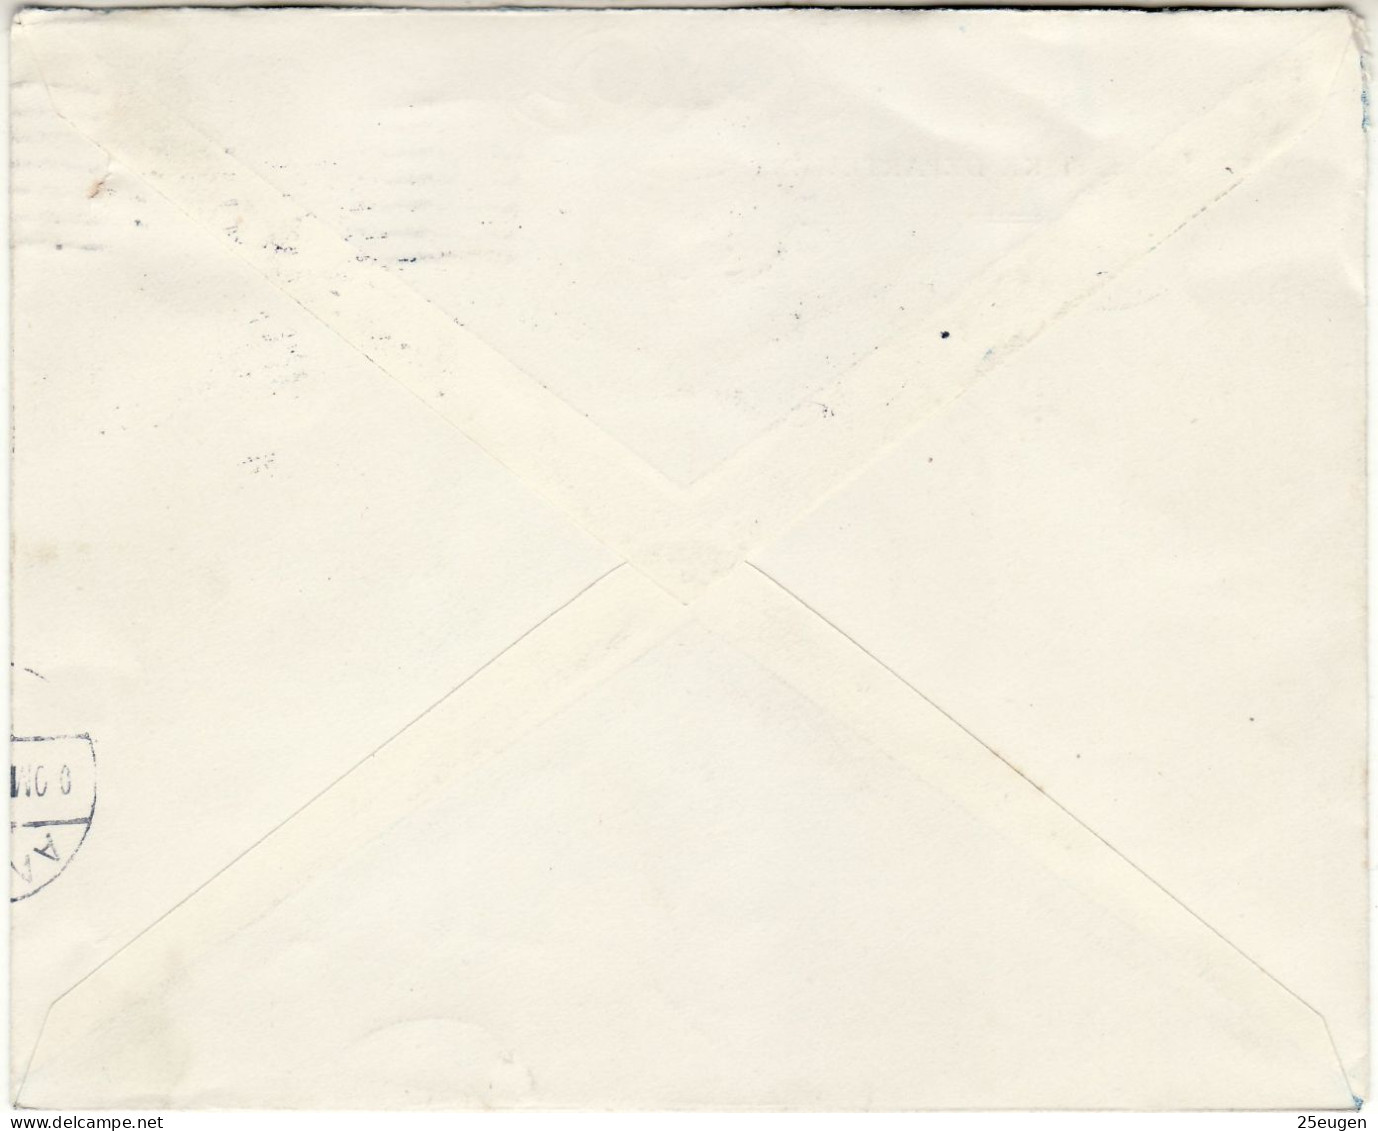 DENMARK 1925 COVER MiNr U 33 SENT FROM KOBENHAVN TO AARHUS - Postal Stationery